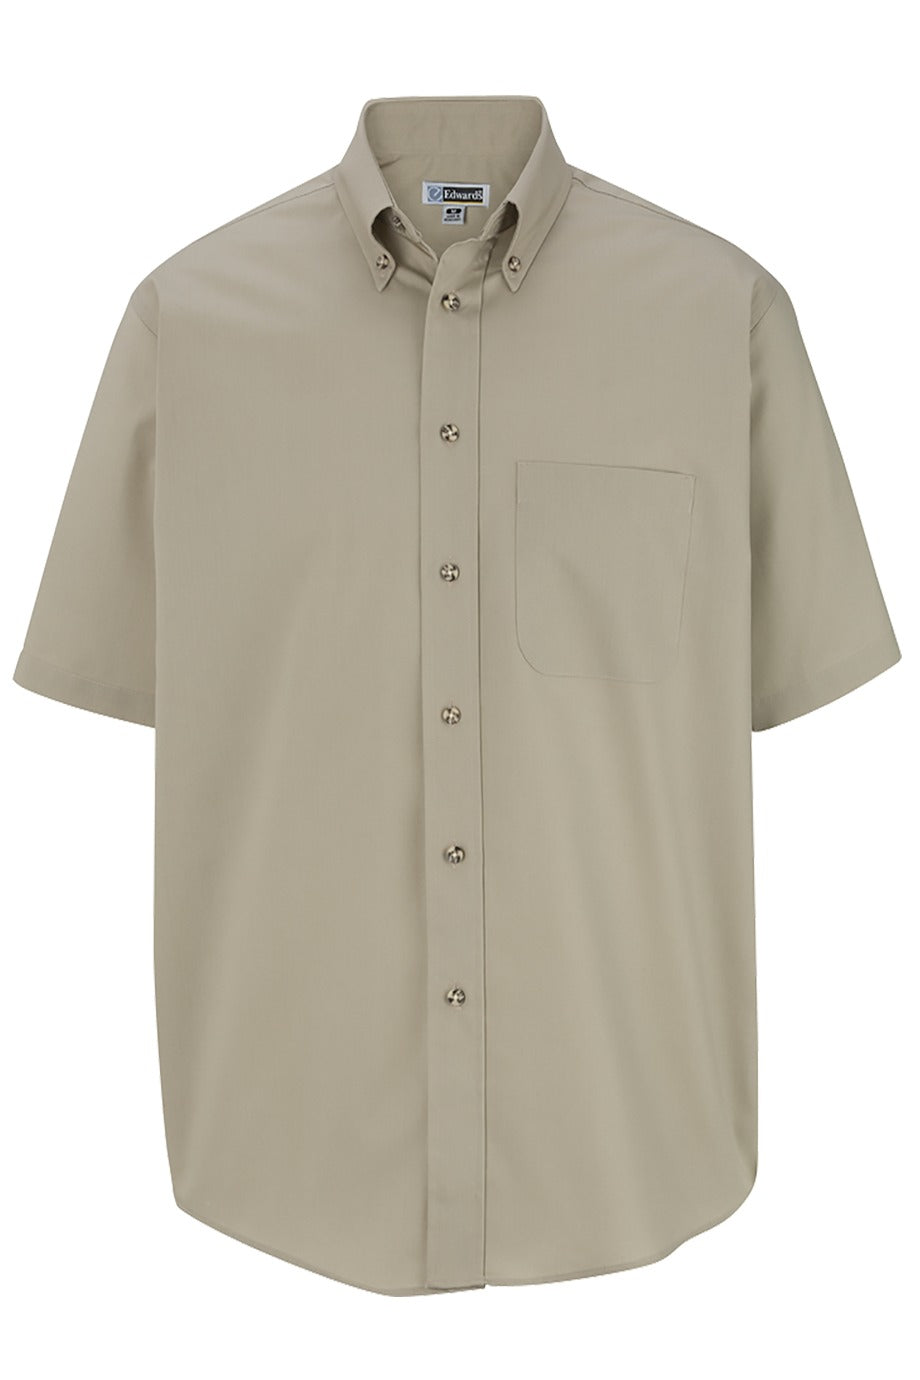 Edwards Men's Tan Easy Care Short Sleeve Poplin Shirt